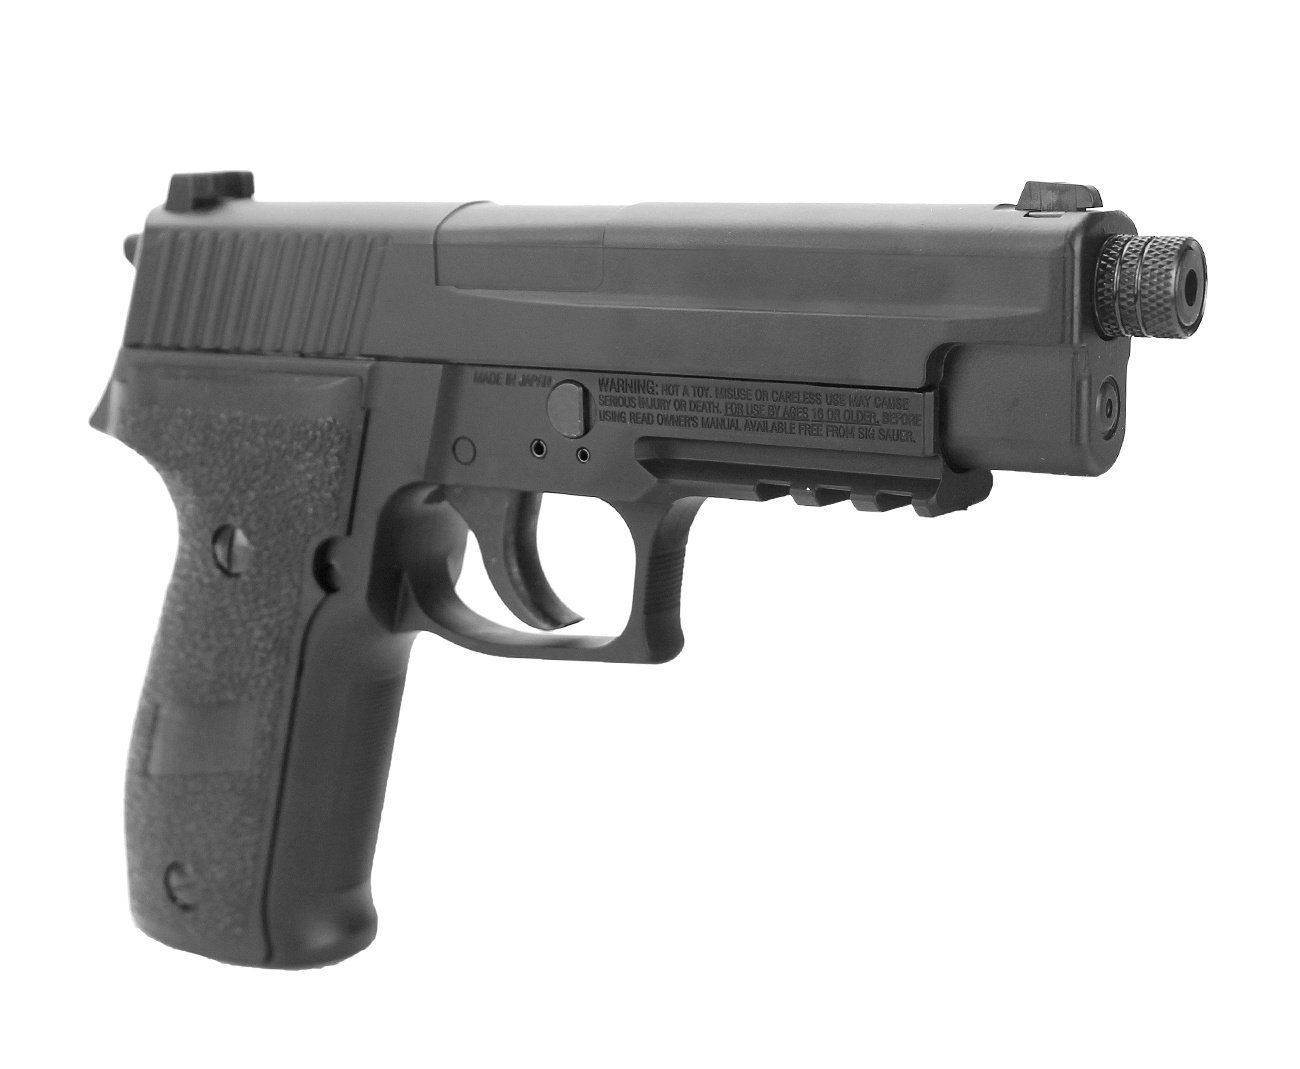 Pistola Pressão Sig Sauer P226 Co2 Full Metal Chumbinho 4,5mm 16 Tiros (8+8) Blowback